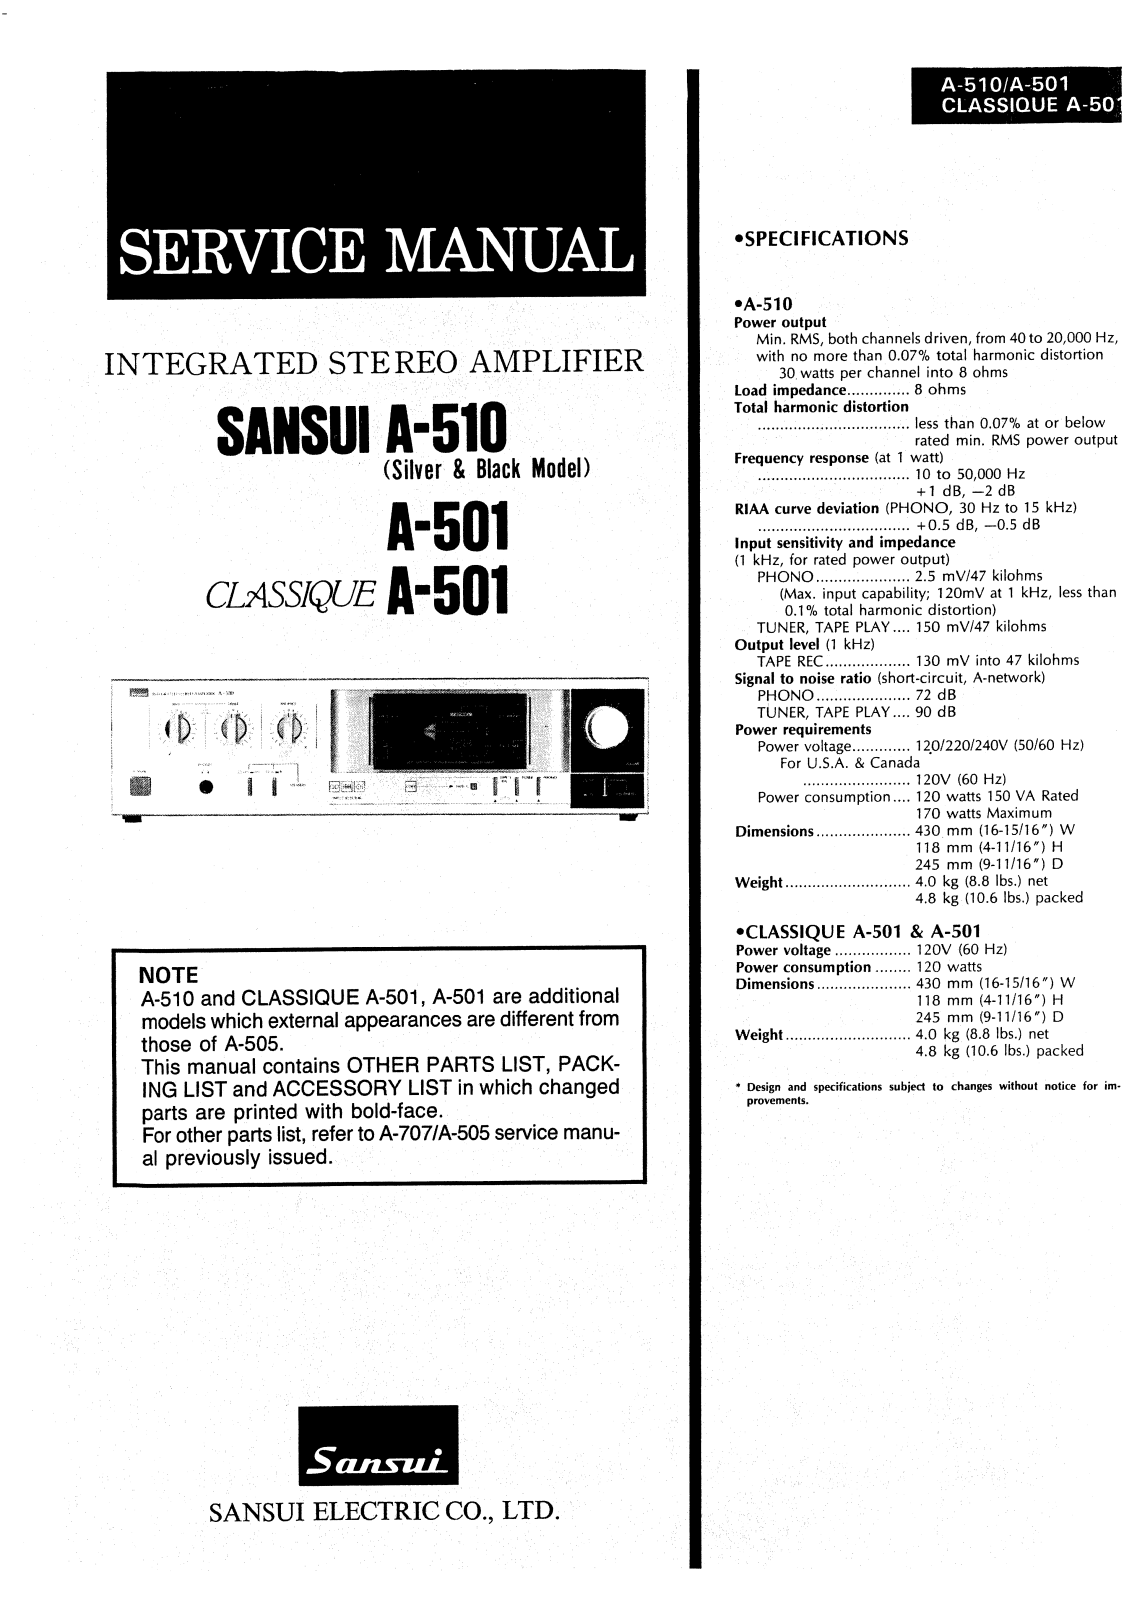 Sansui A-501, A-510 Service manual